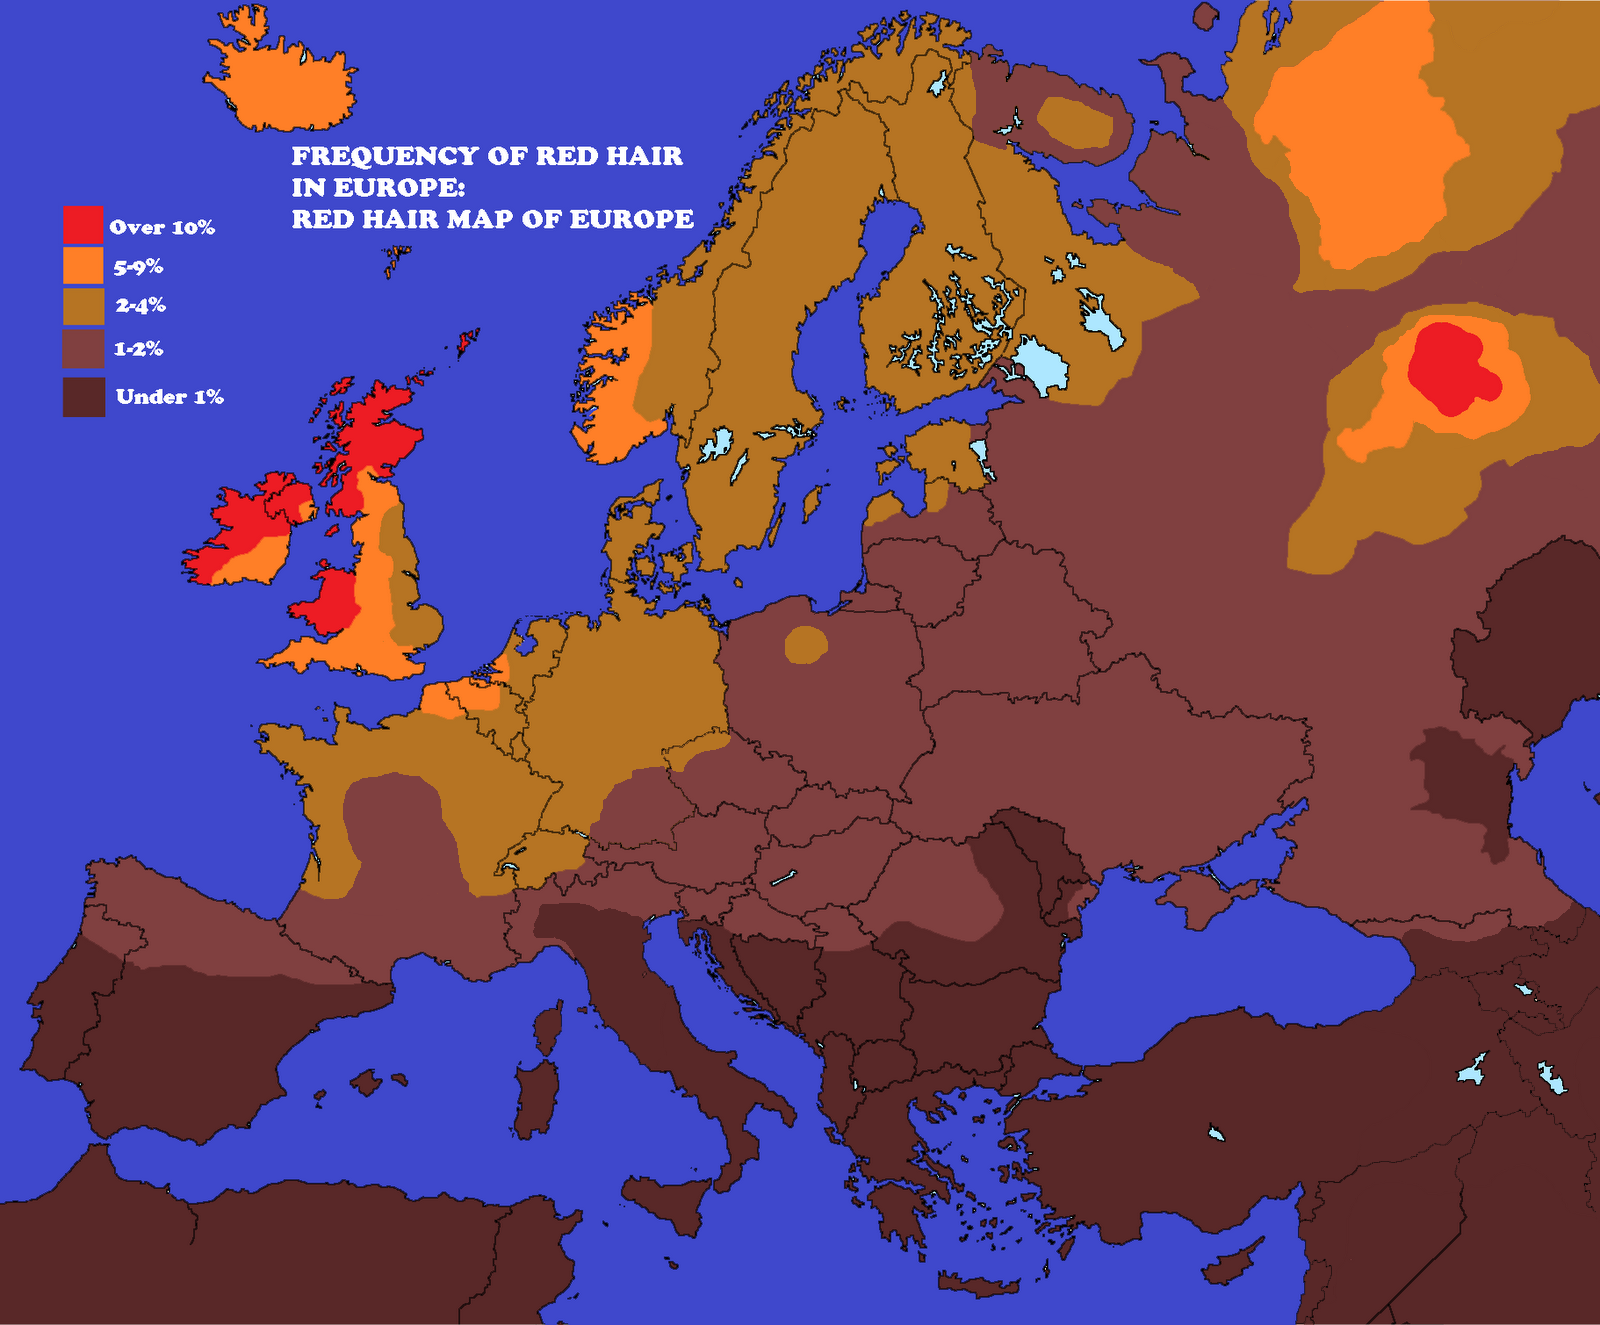 http://1.bp.blogspot.com/-Pmm80Ds3Uc4/UKa-Wvq9CwI/AAAAAAAAASU/Z3W3OaMVpEQ/s1600/Red-Hair-Map-of-Europe.png